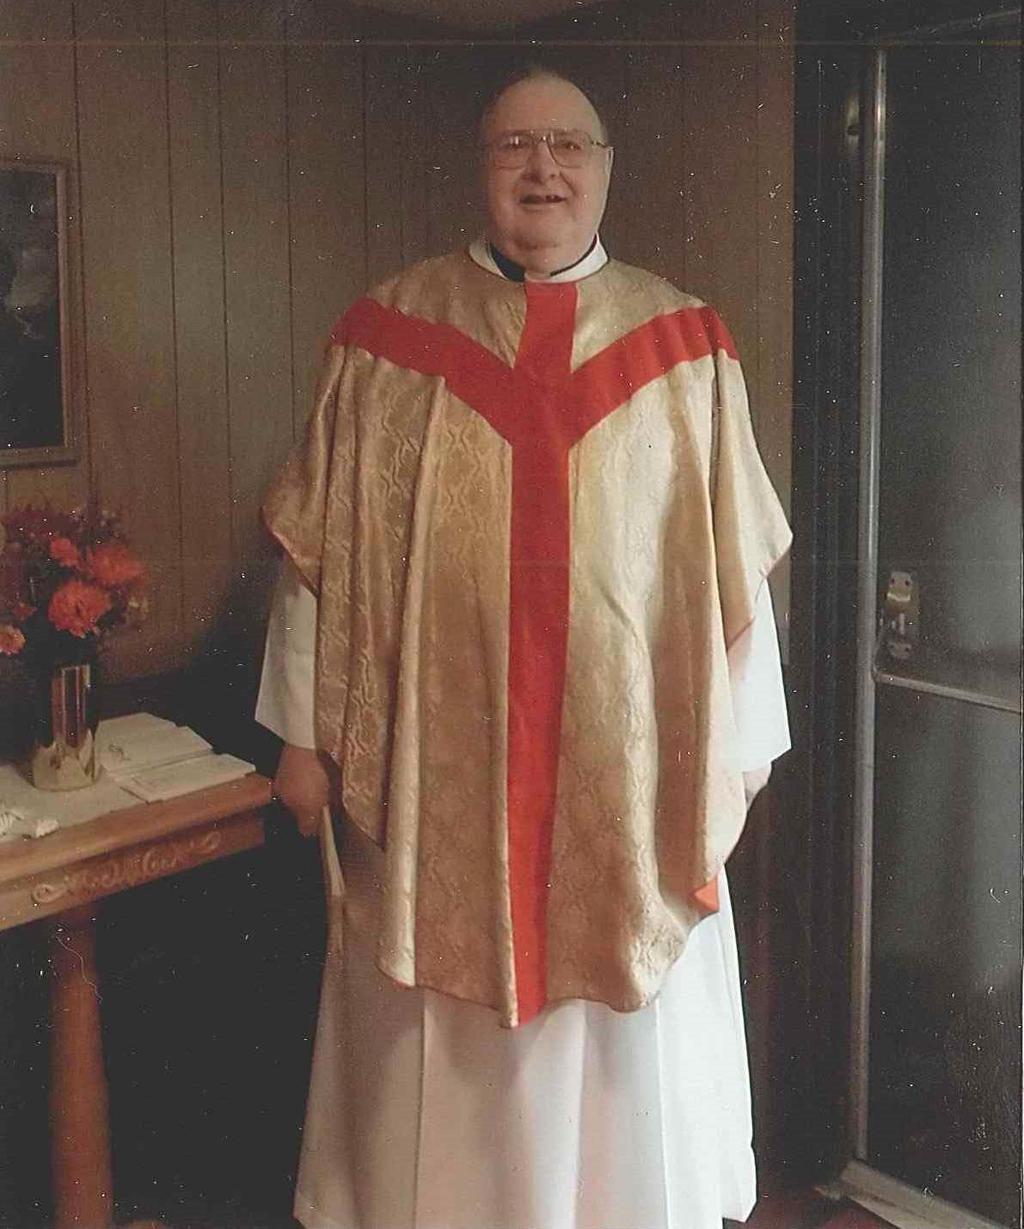 22 God s Field January 2015 śp. Very Rev. Edward Meus Very Rev. Edward Meus, age 72 of Portage; formerly of Merrillville, passed away Wednesday, December 24, 2014.